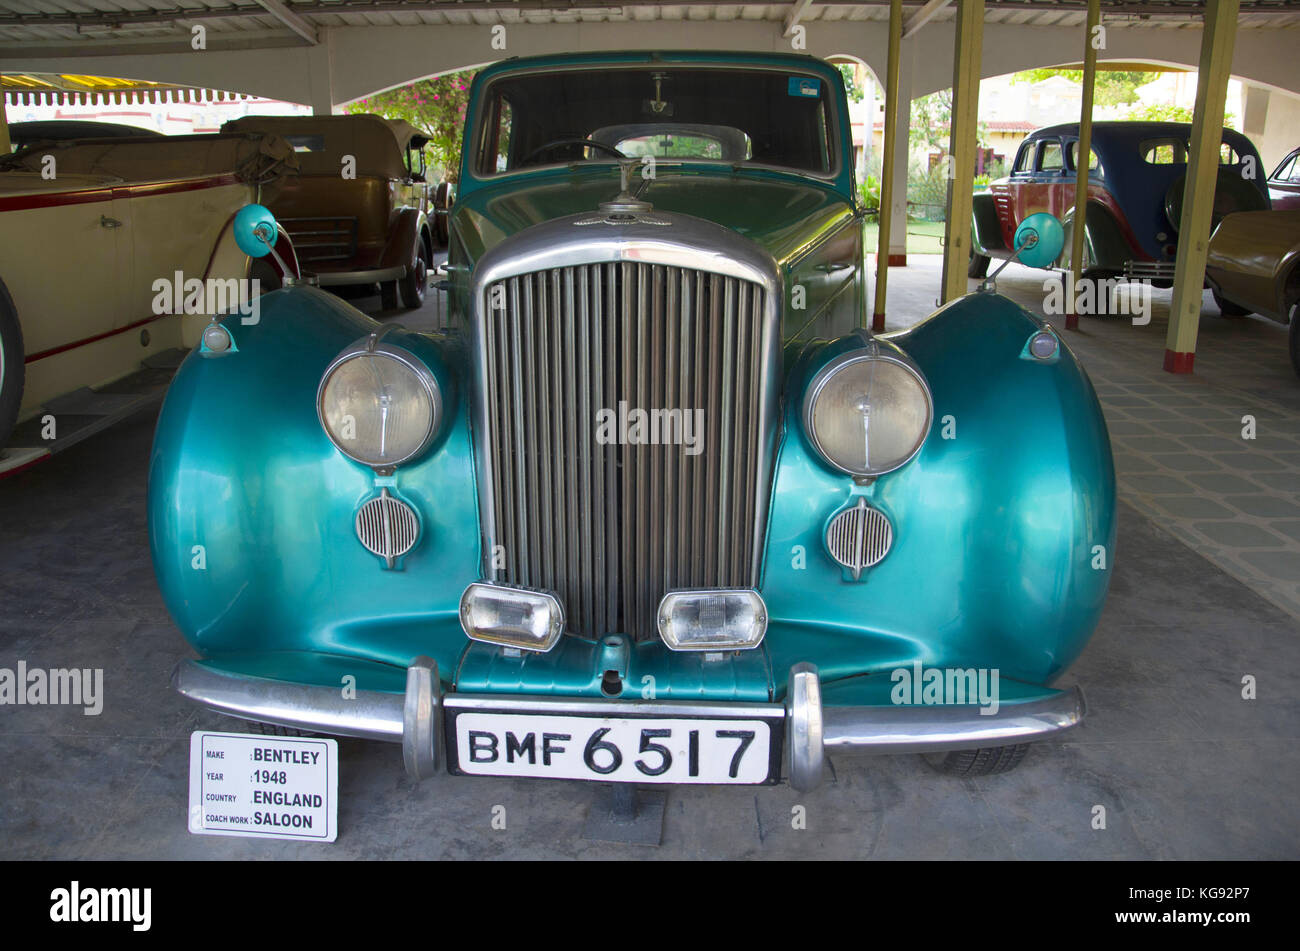 Bentley (anno 1948), coach lavoro - salone, Inghilterra. auto mondo vintage car museum, Ahmedabad, Gujarat, India Foto Stock